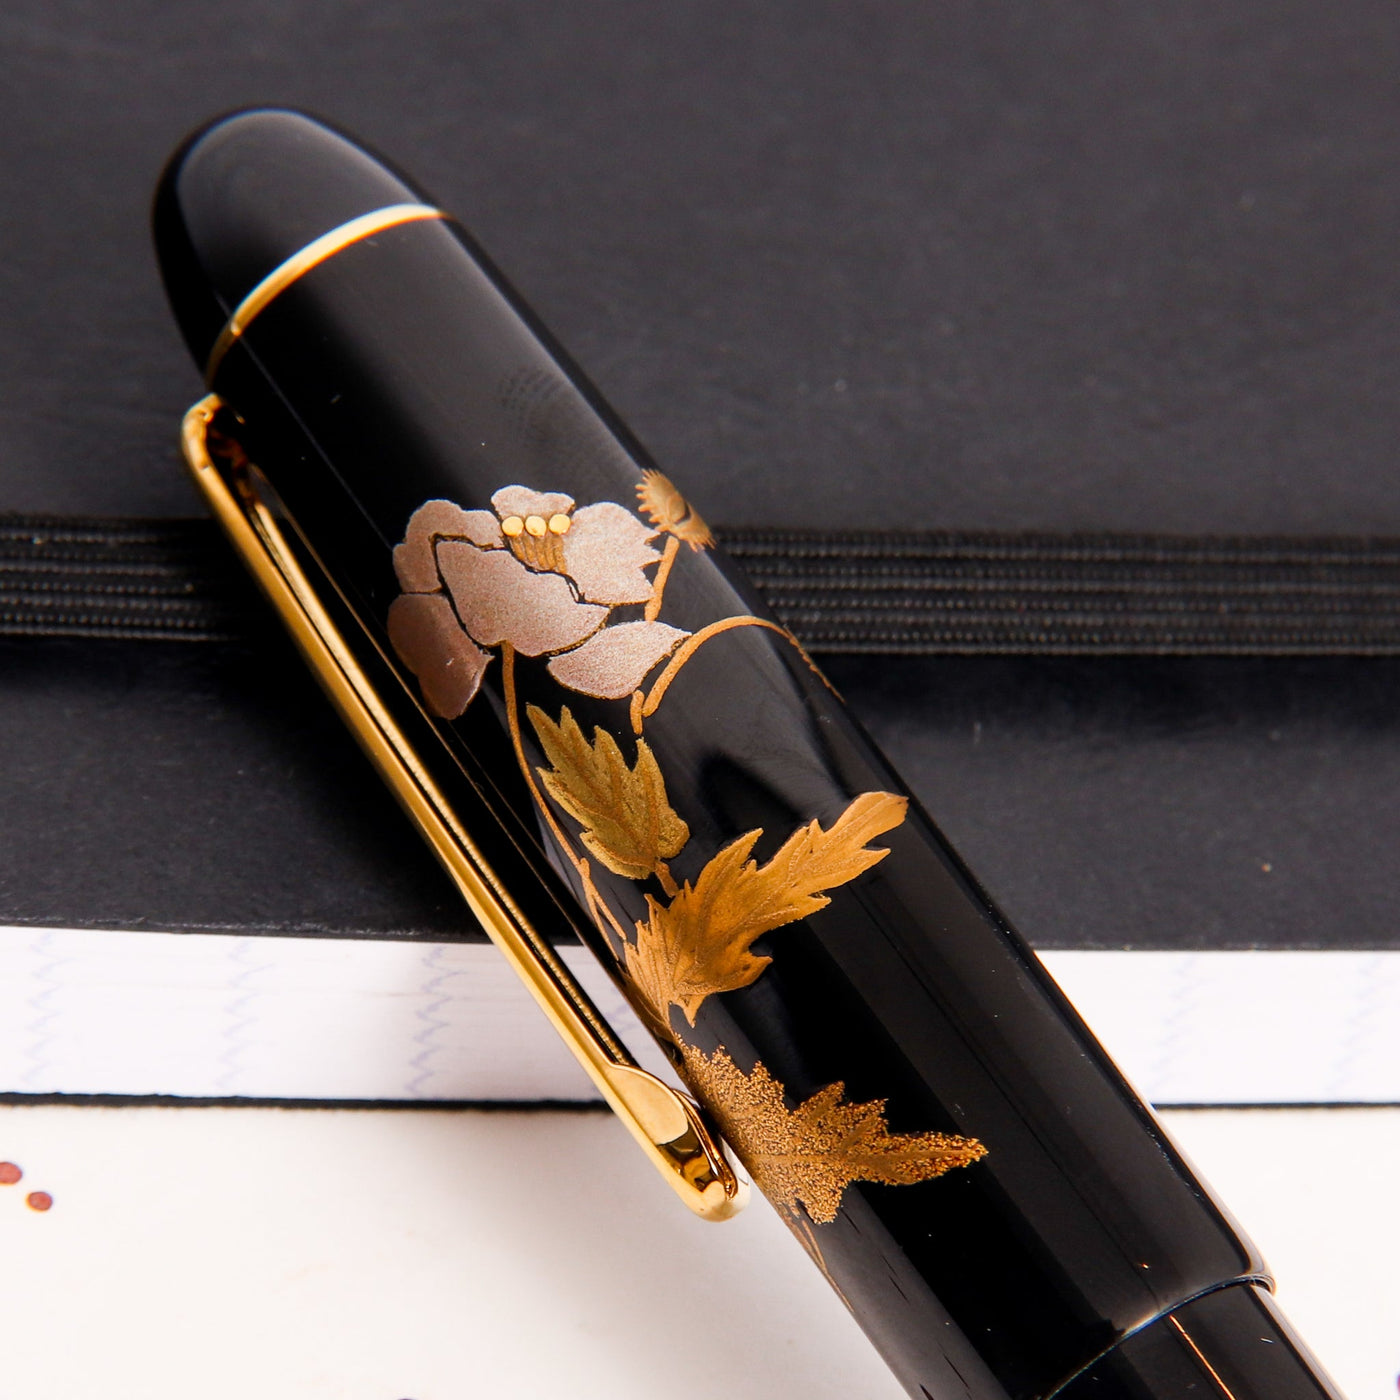 Platinum 3776 Century Urushi Maki e Poppy Fountain Pen Artwork On Cap